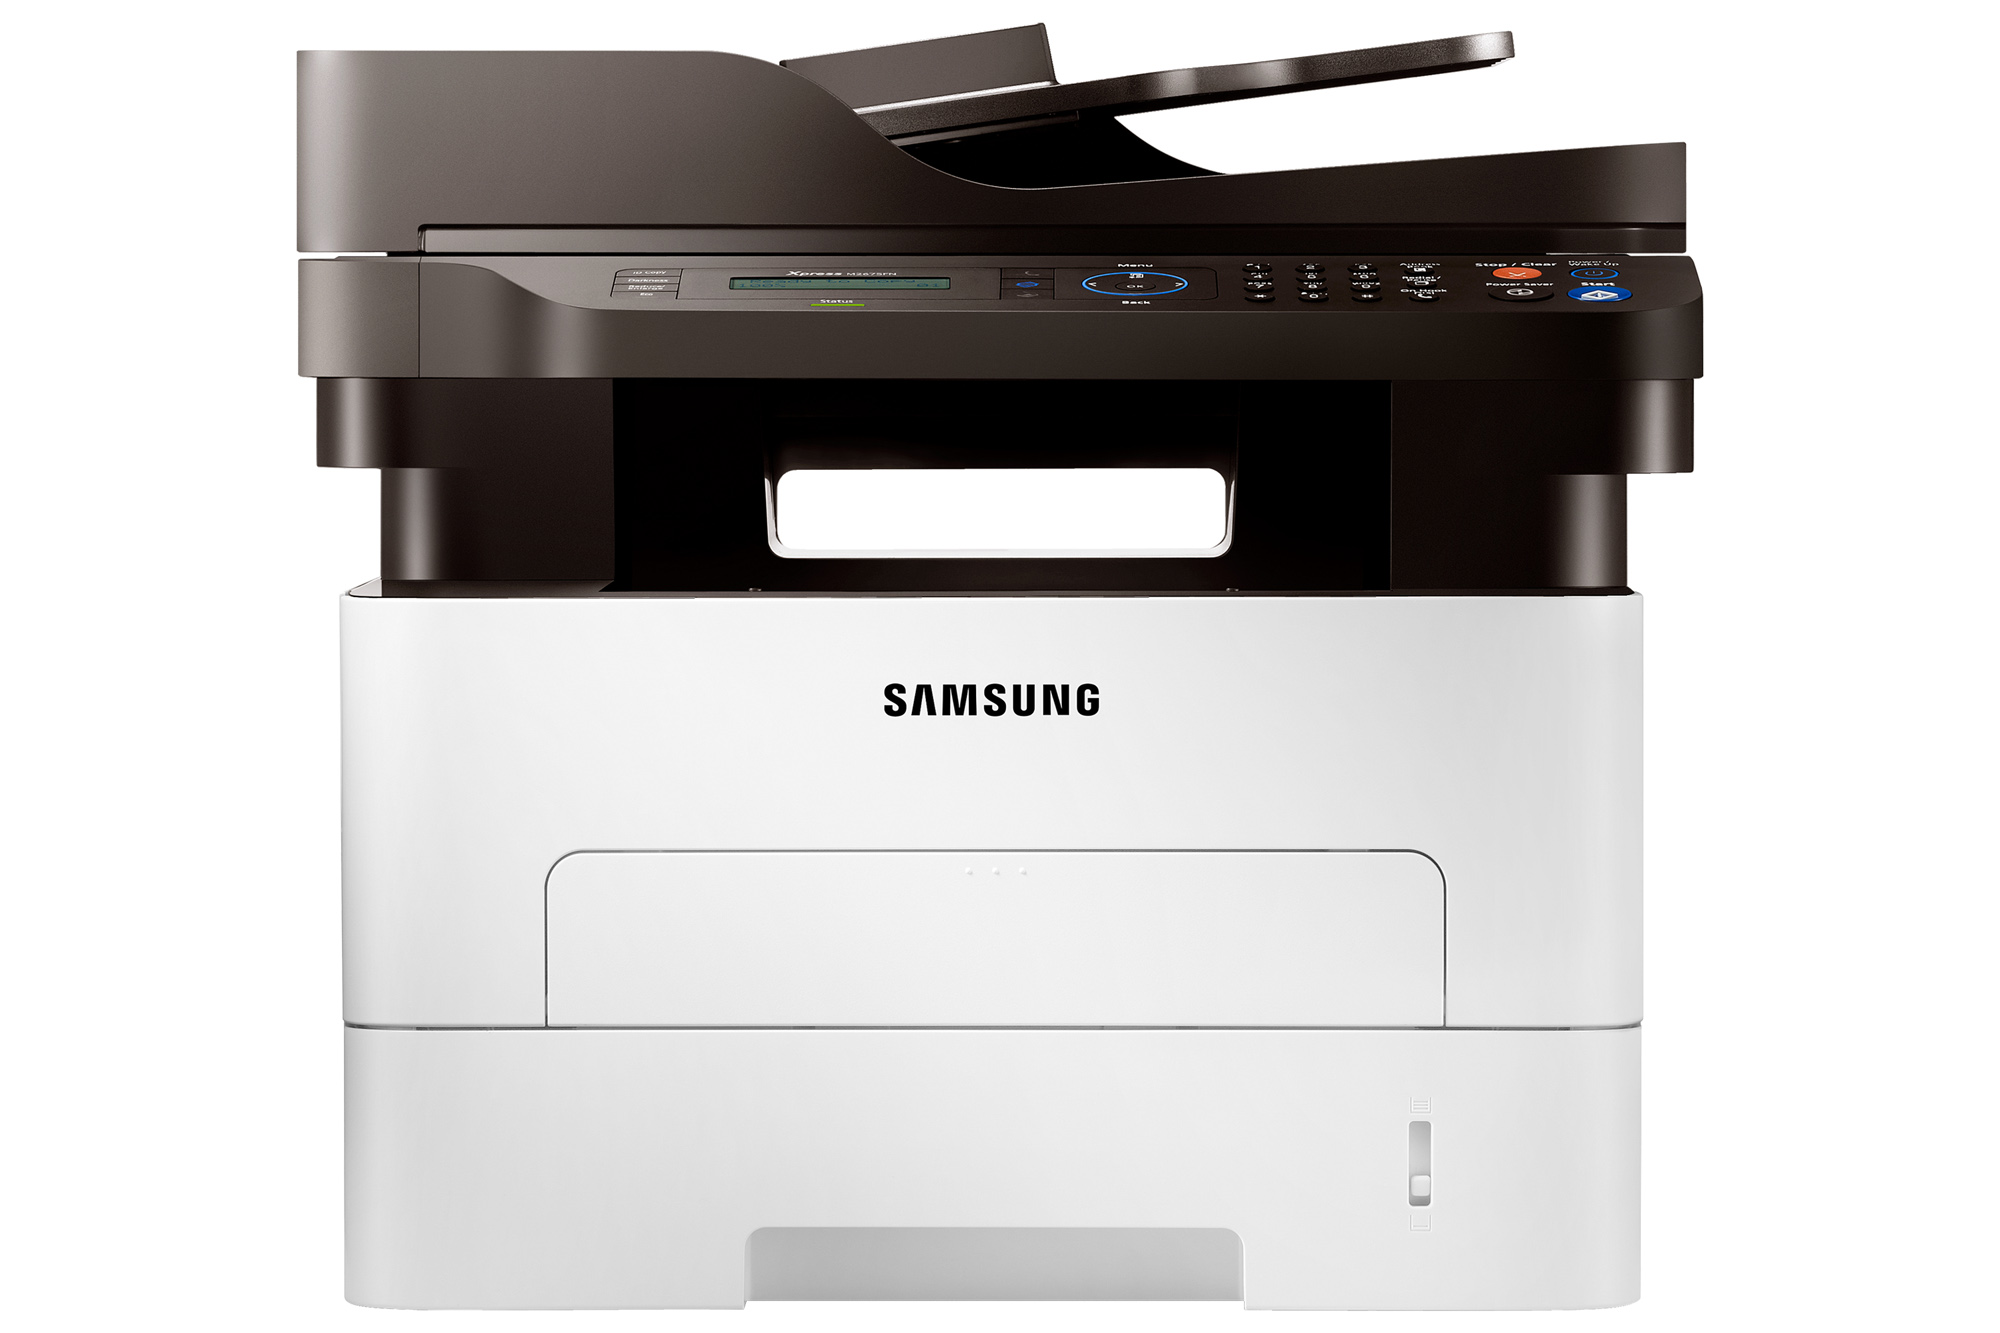 Impresora Samsung Slm2675fn fax xpress l�ser multifunci�n serie de hp 4020044099 laser m2675fn